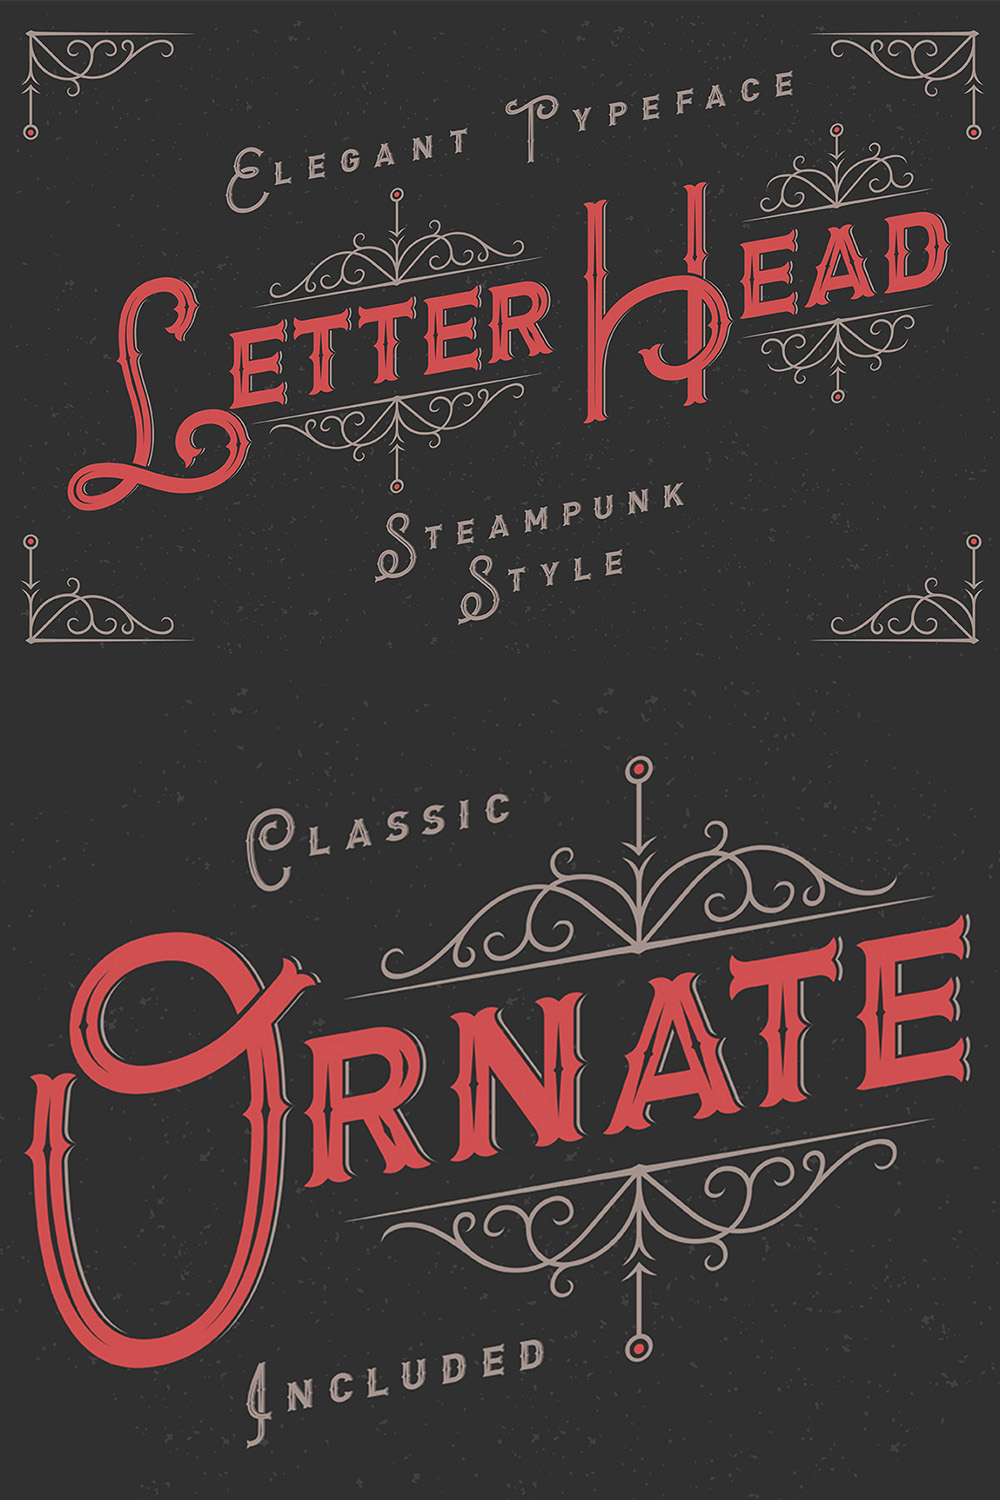 Letterhead Typeface Font with Ornate Design pinterest image.